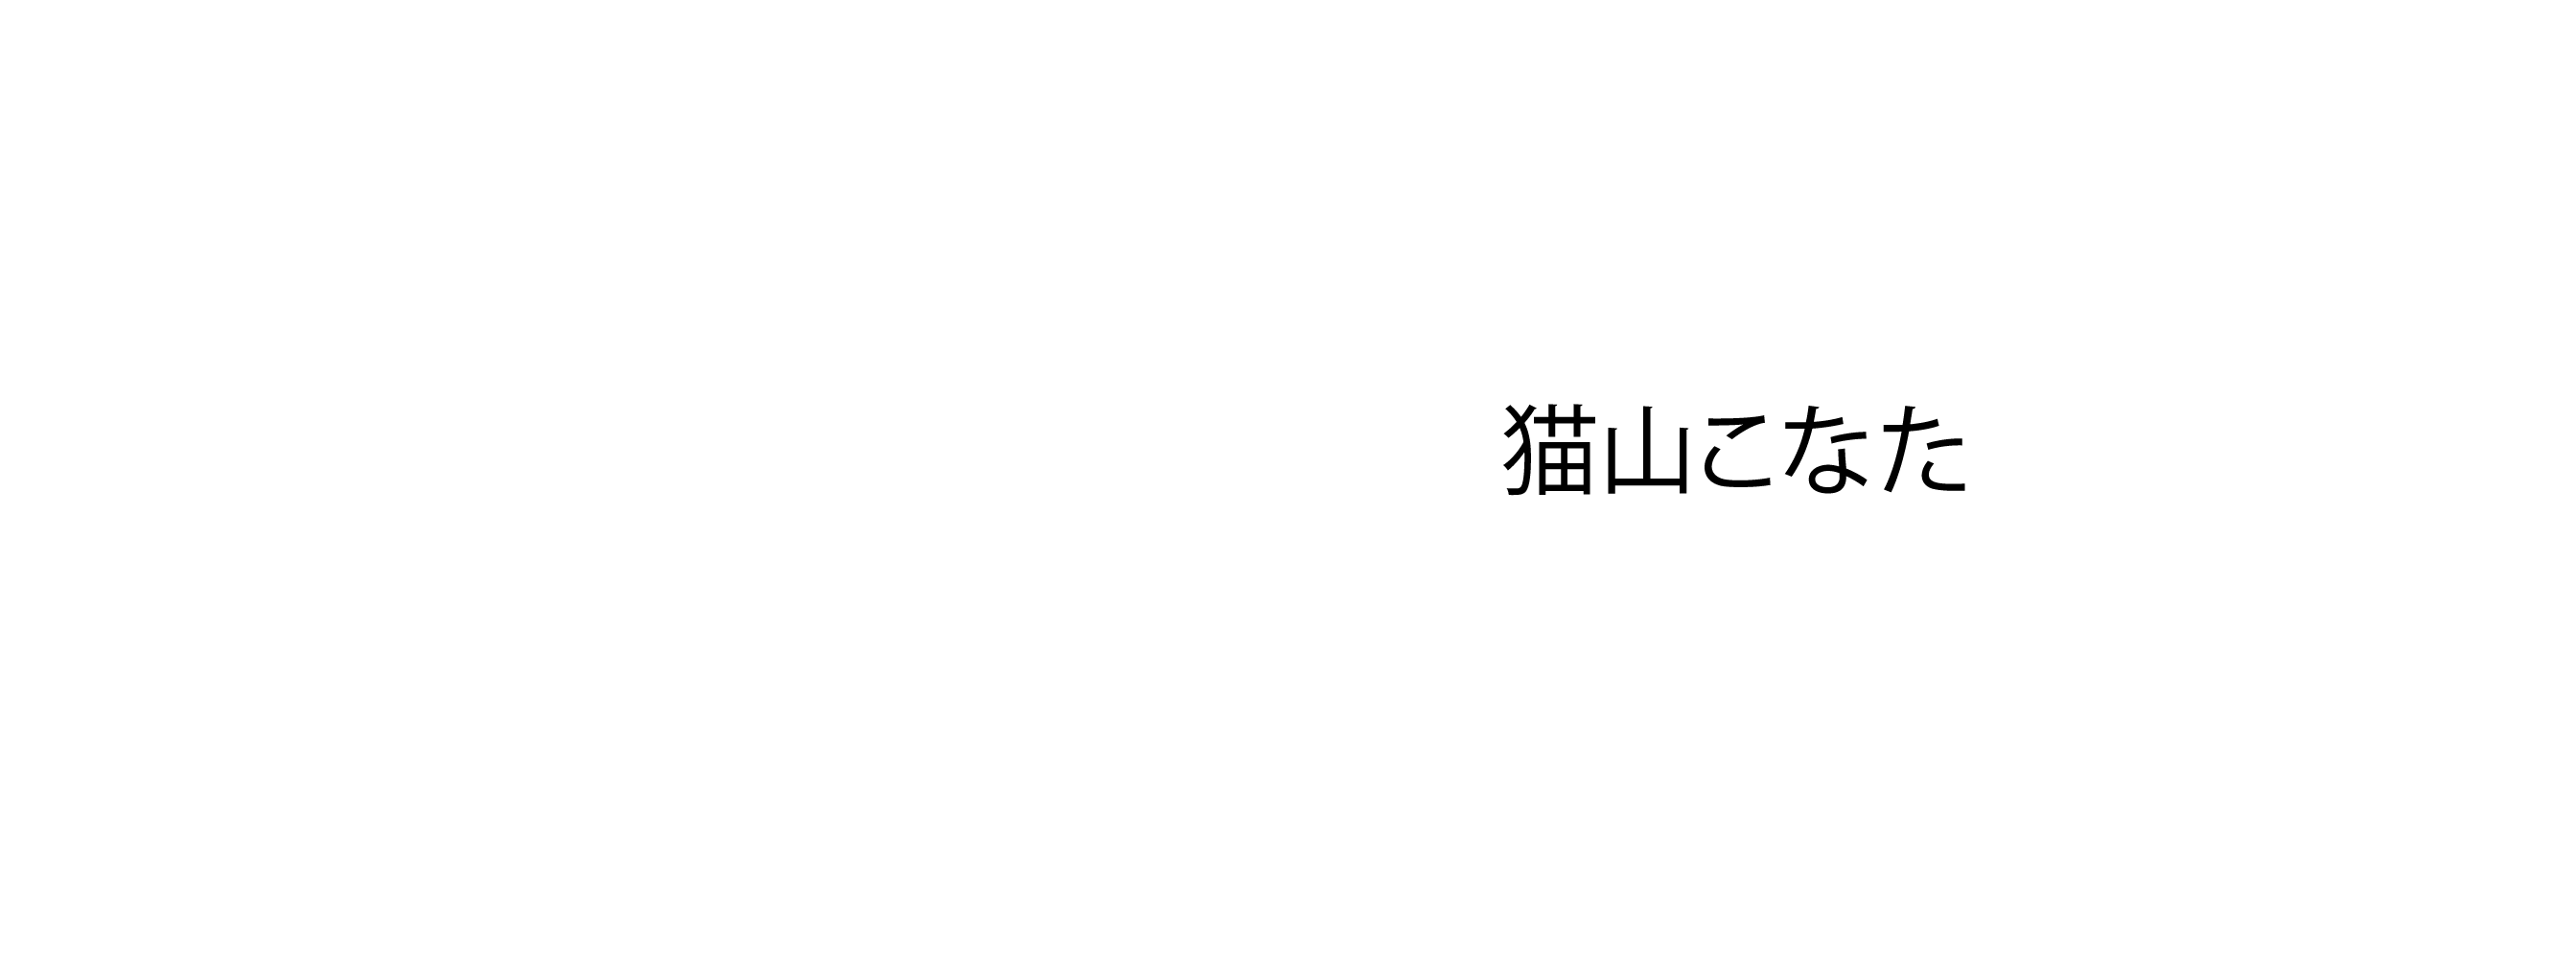 Konata Nekoyama